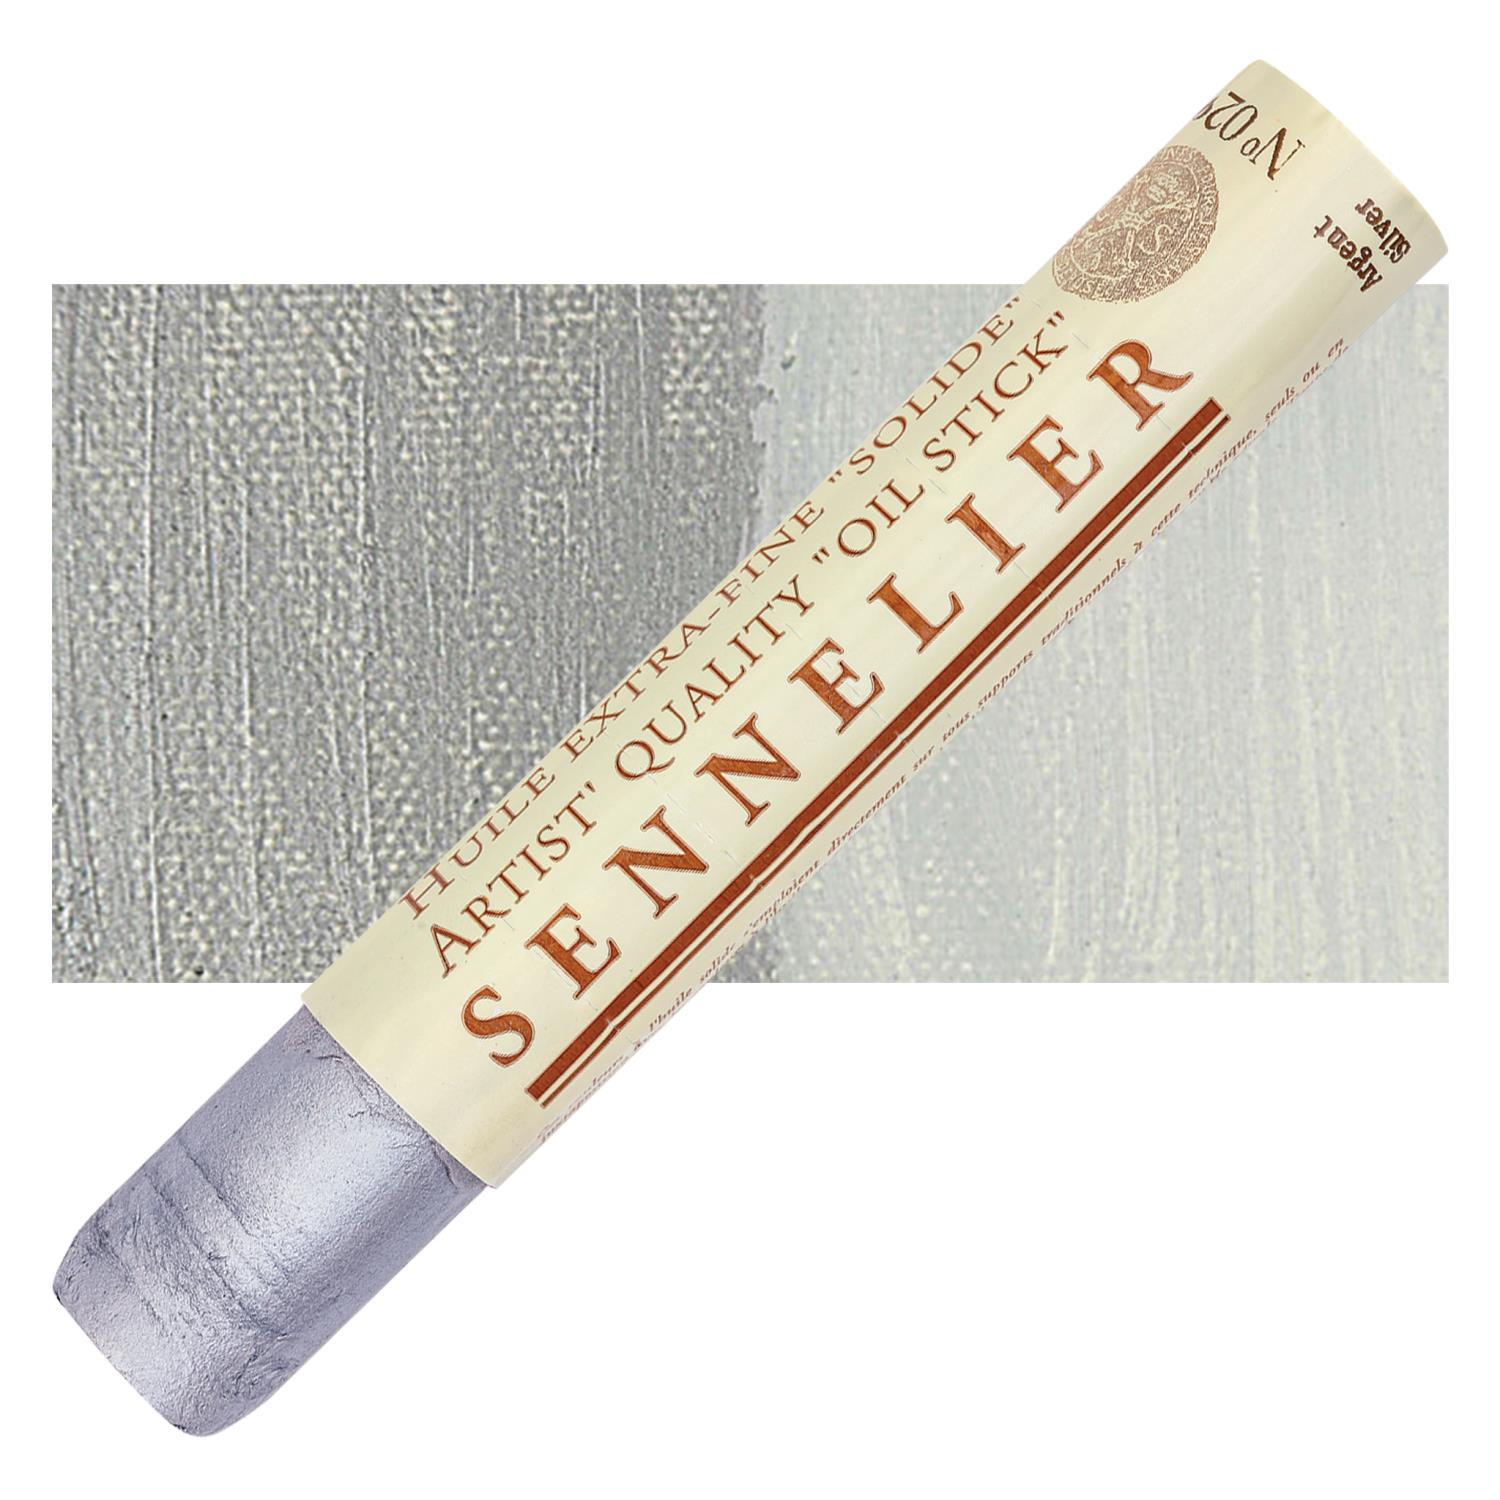 Sennelier Artist Oil Stick 38ml - 029 Silver S2 utgår